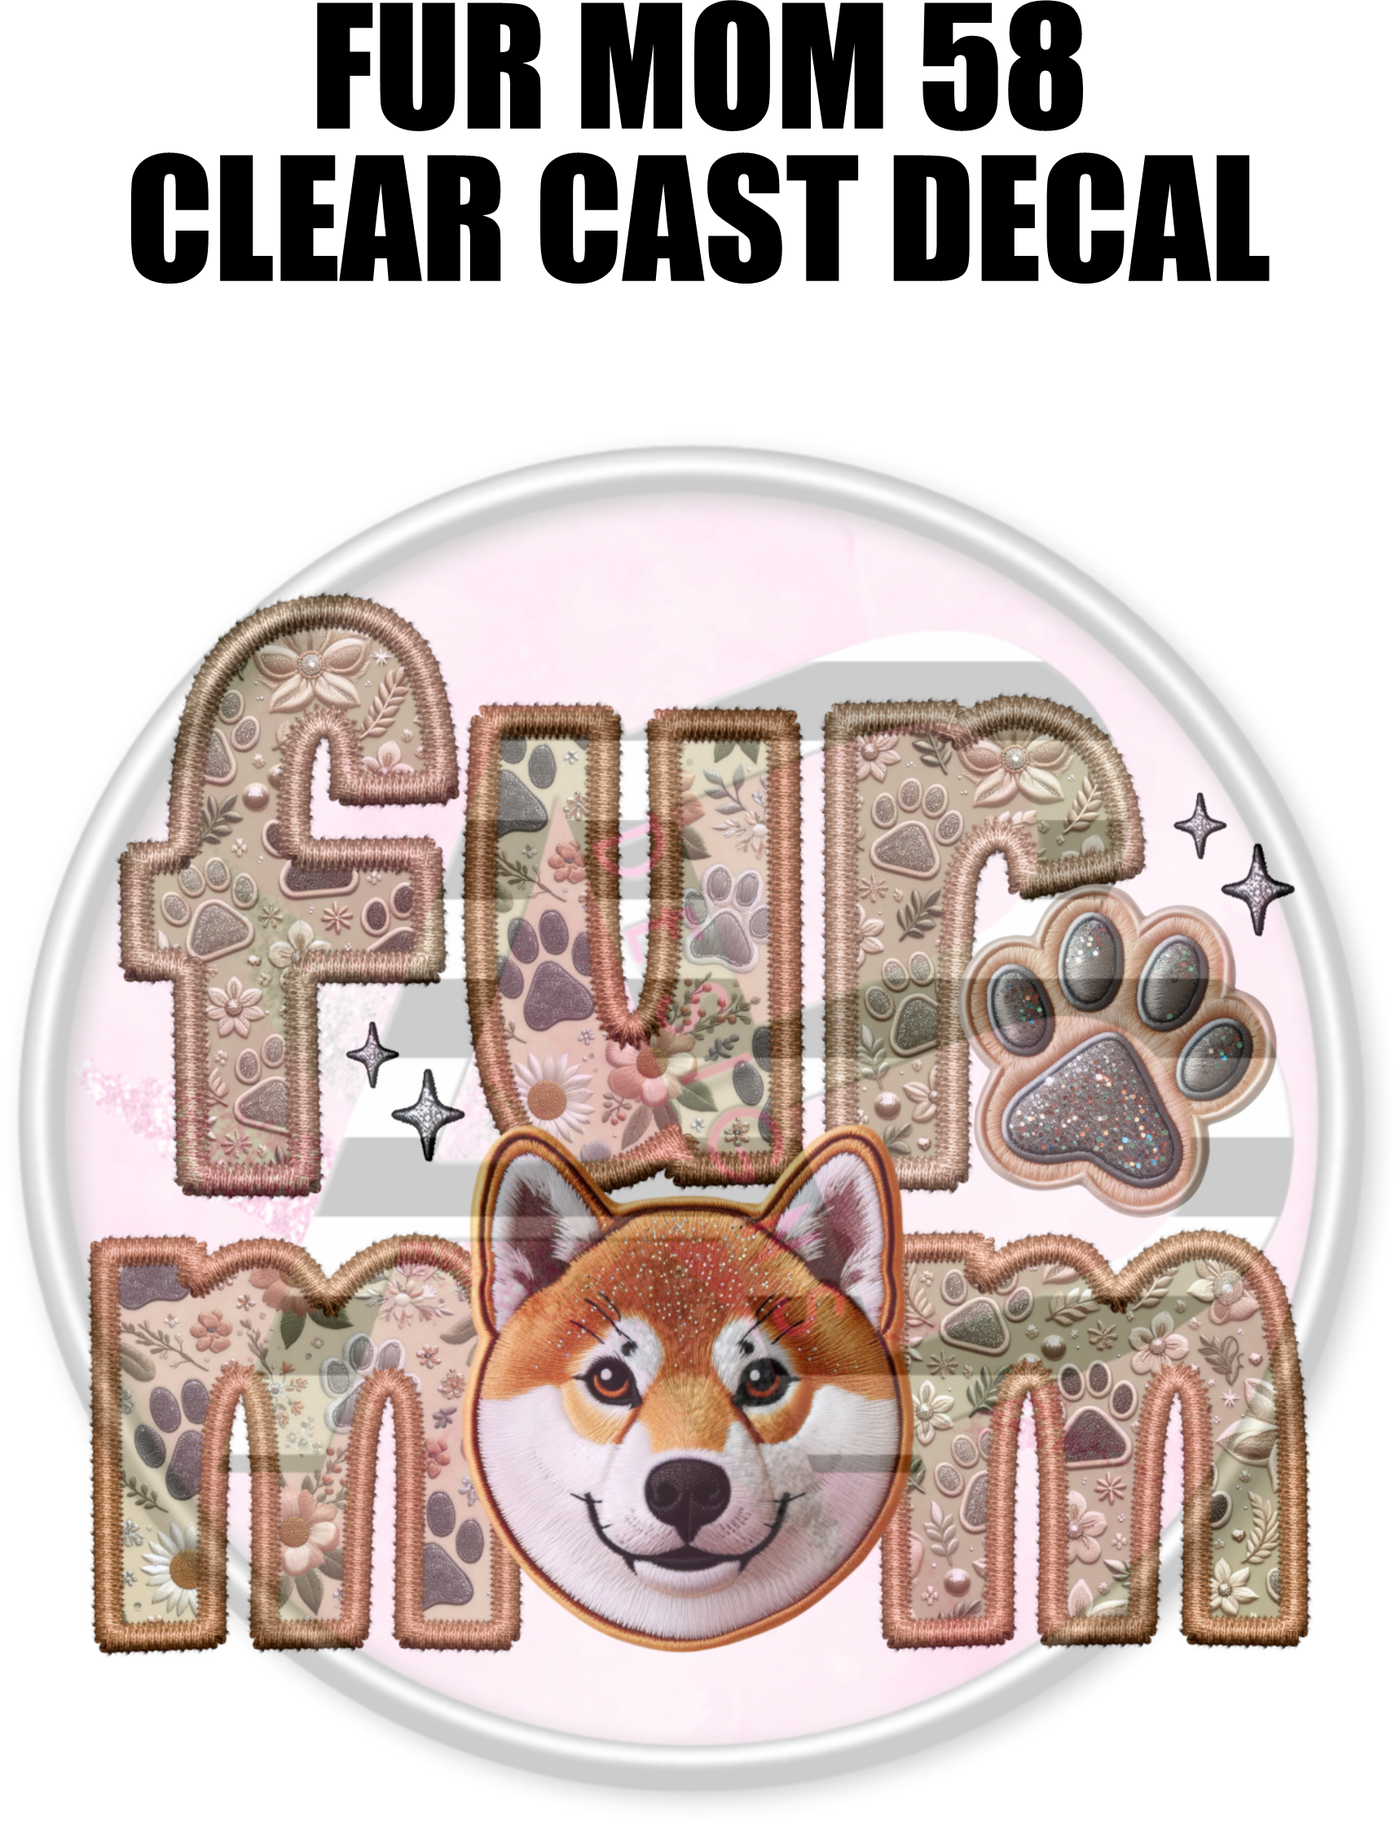 Fur Mom 58 - Clear Cast Decal